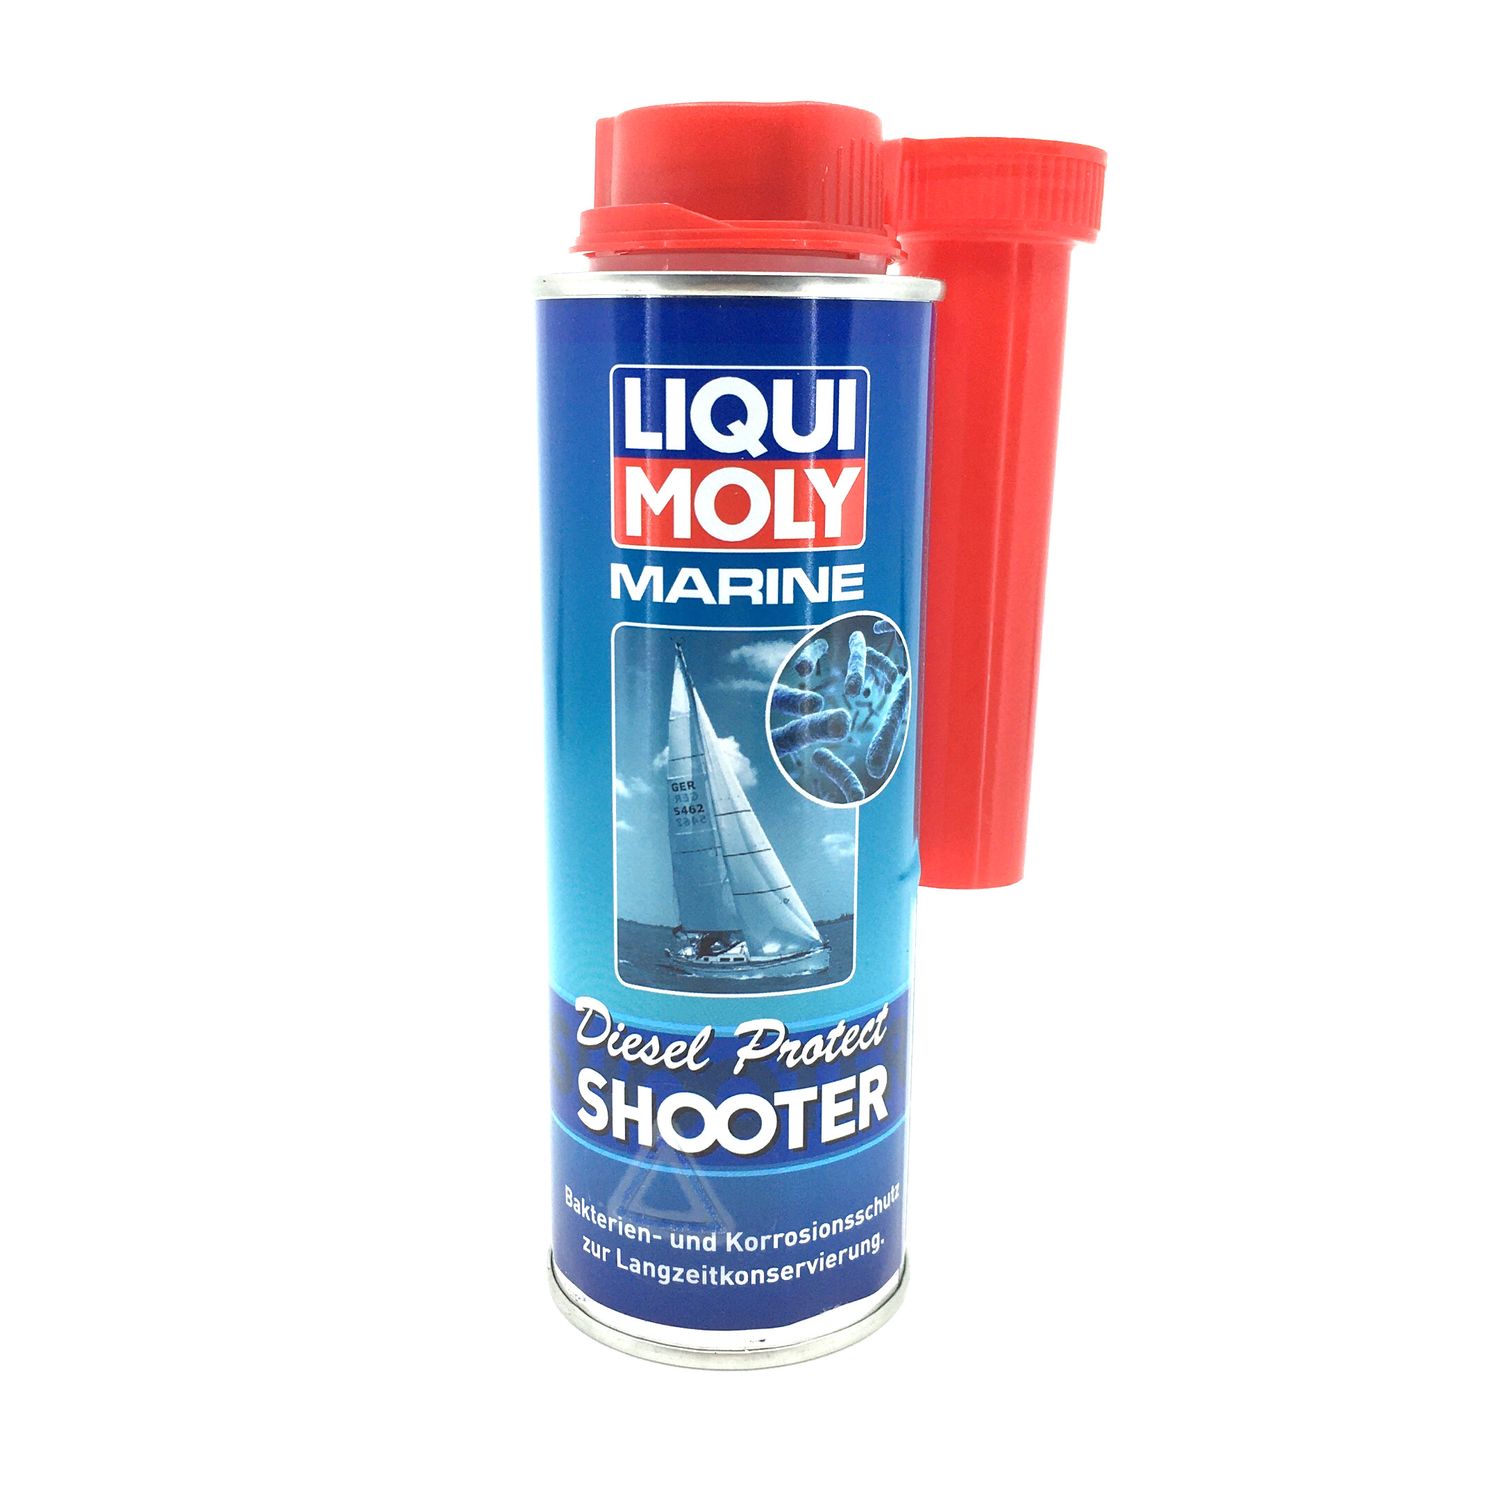 LIQUI MOLY Marine Diesel Protect Shooter 200ml